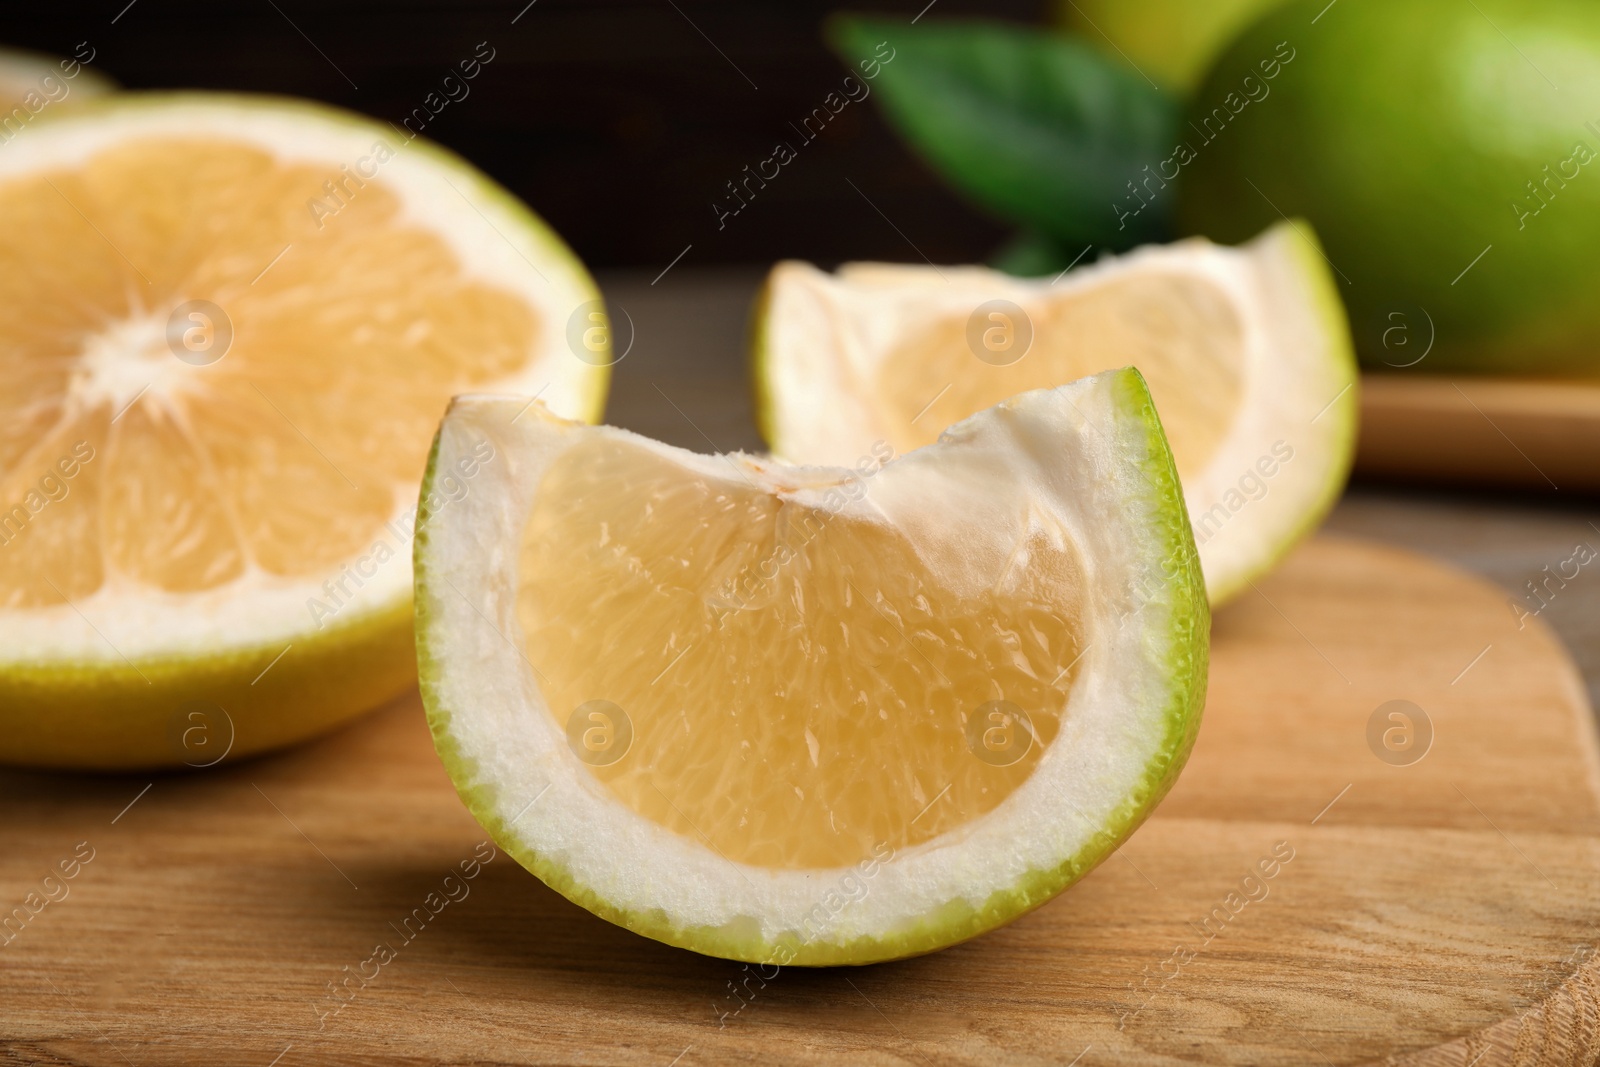 Photo of Cut fresh sweetie fruit on wooden board, closeup